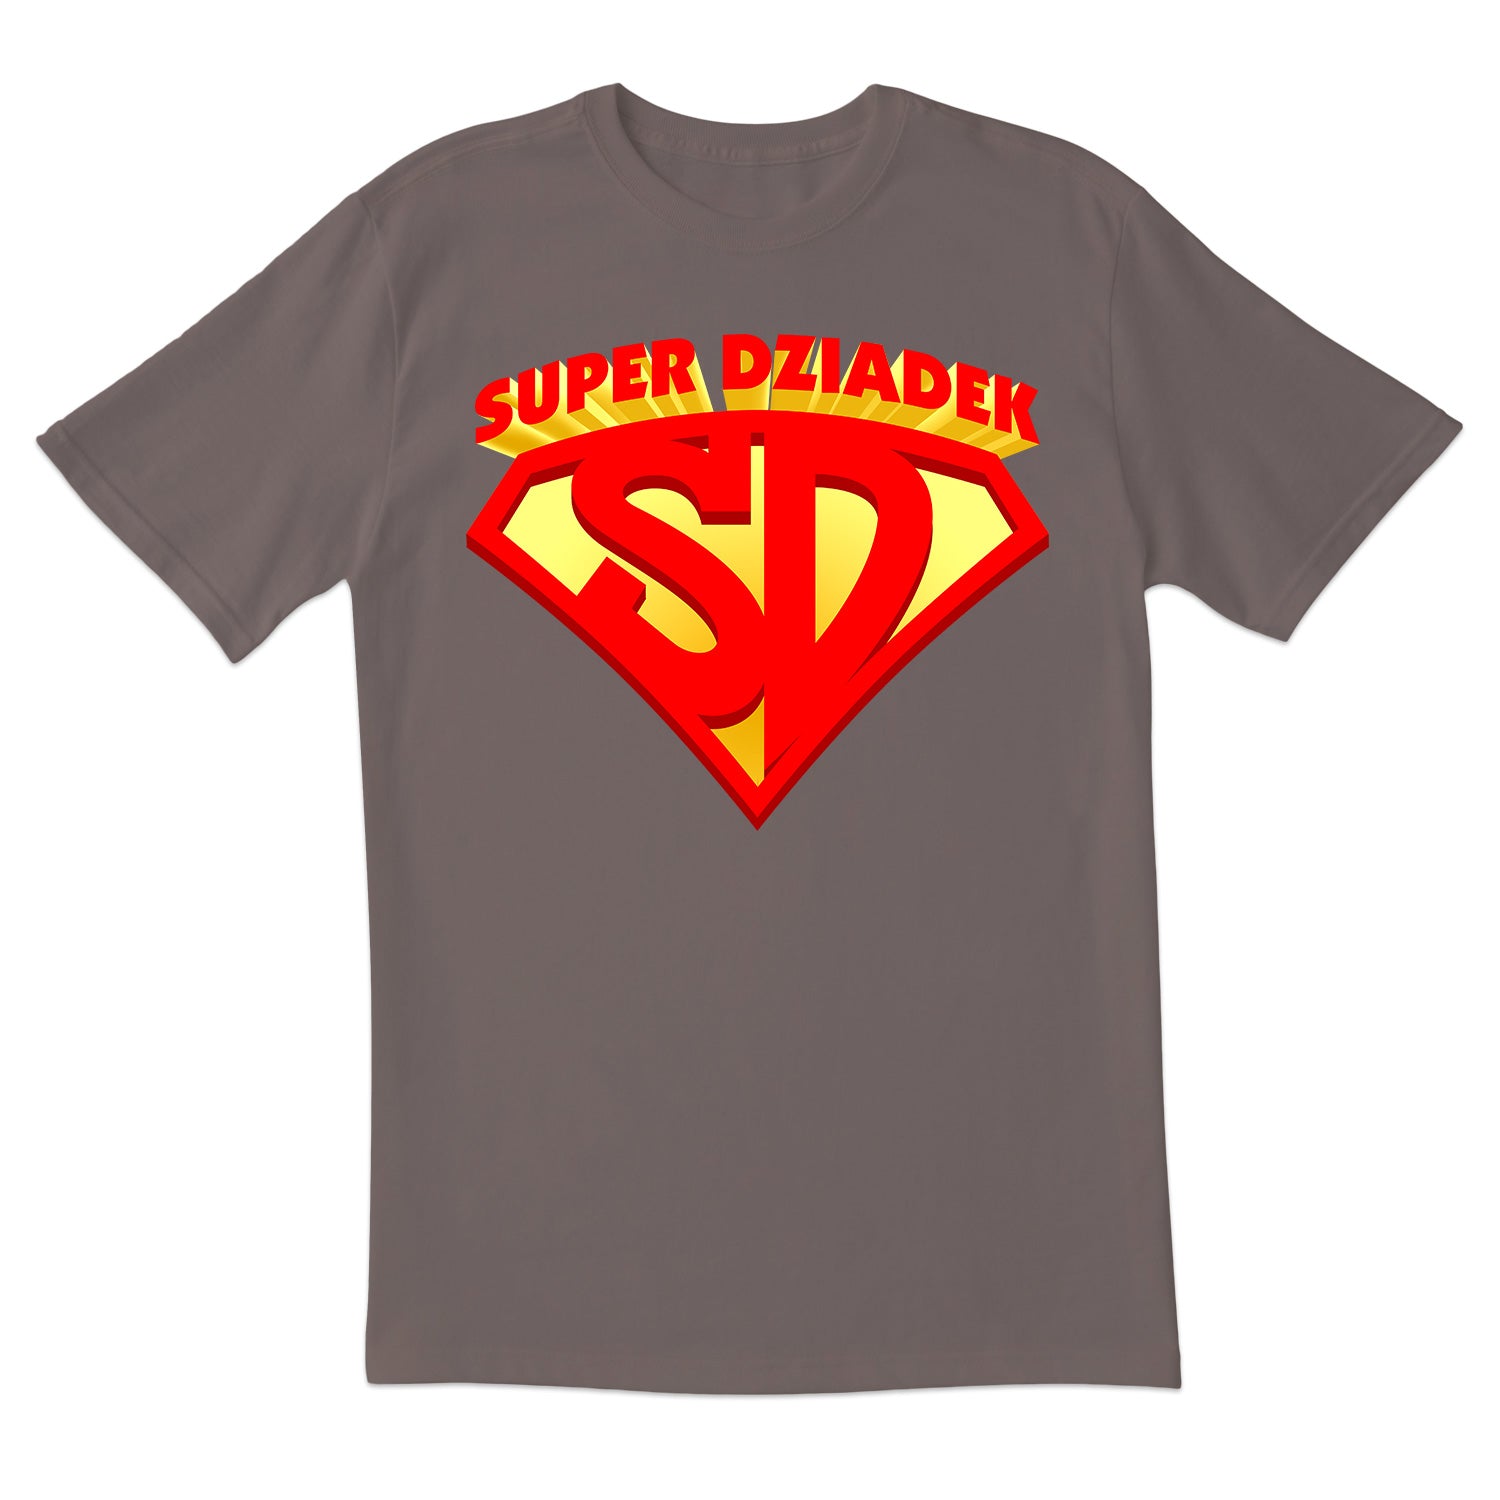 Super Dziadek Short Sleeve Tshirt